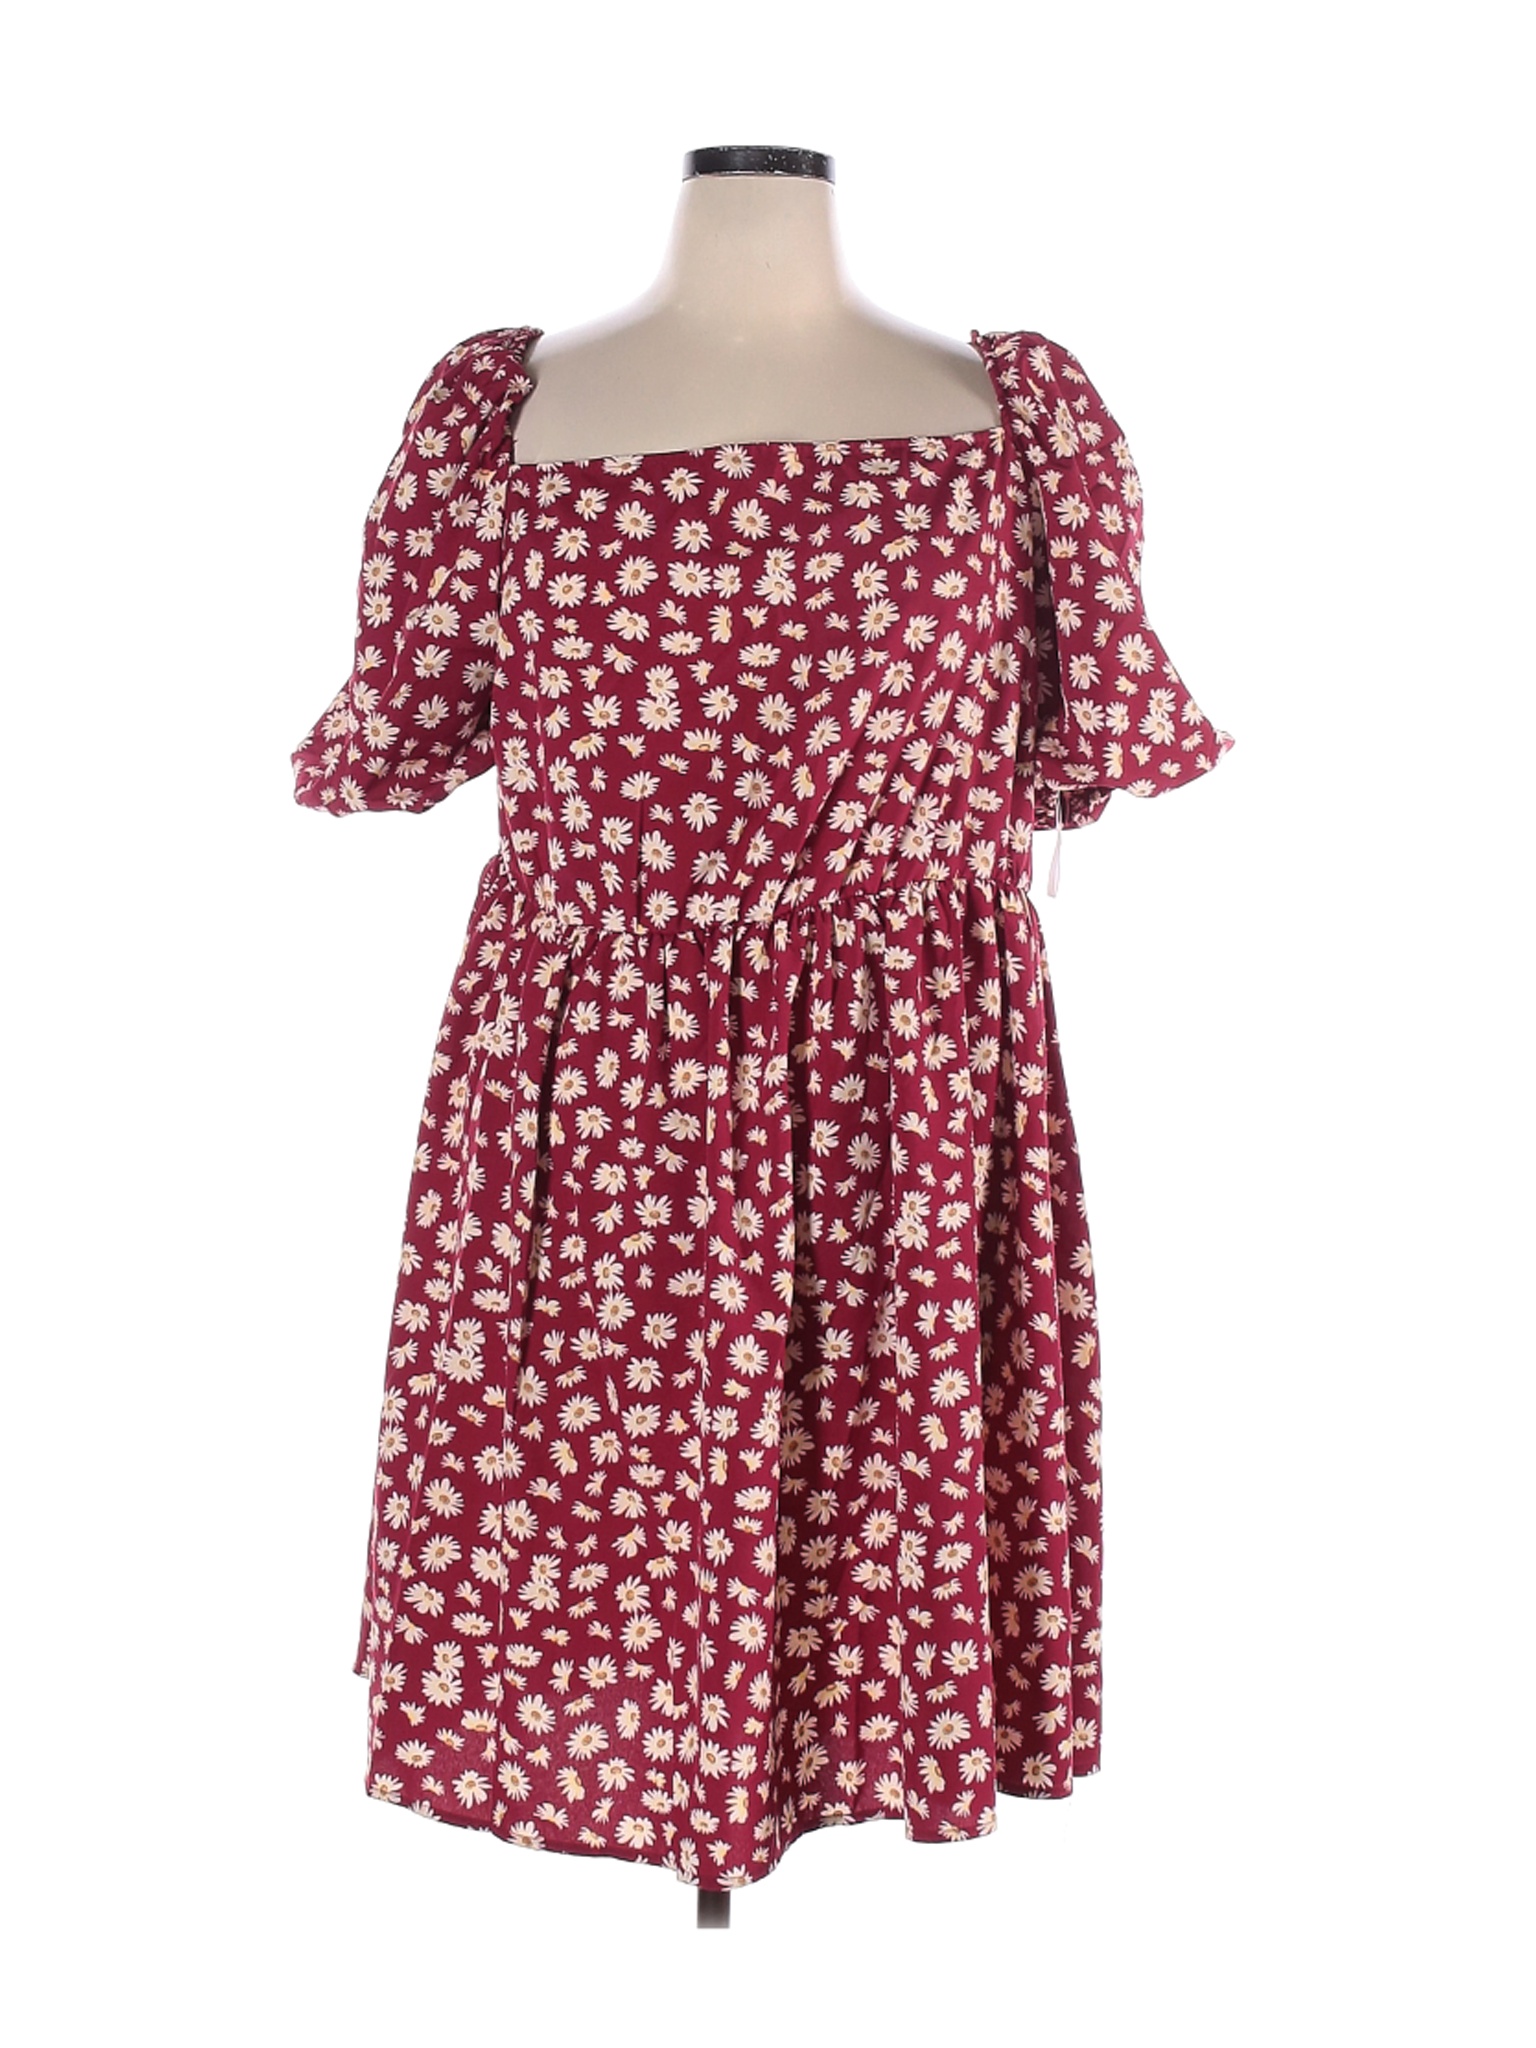 Shein Women Red Casual Dress 4X Plus | eBay